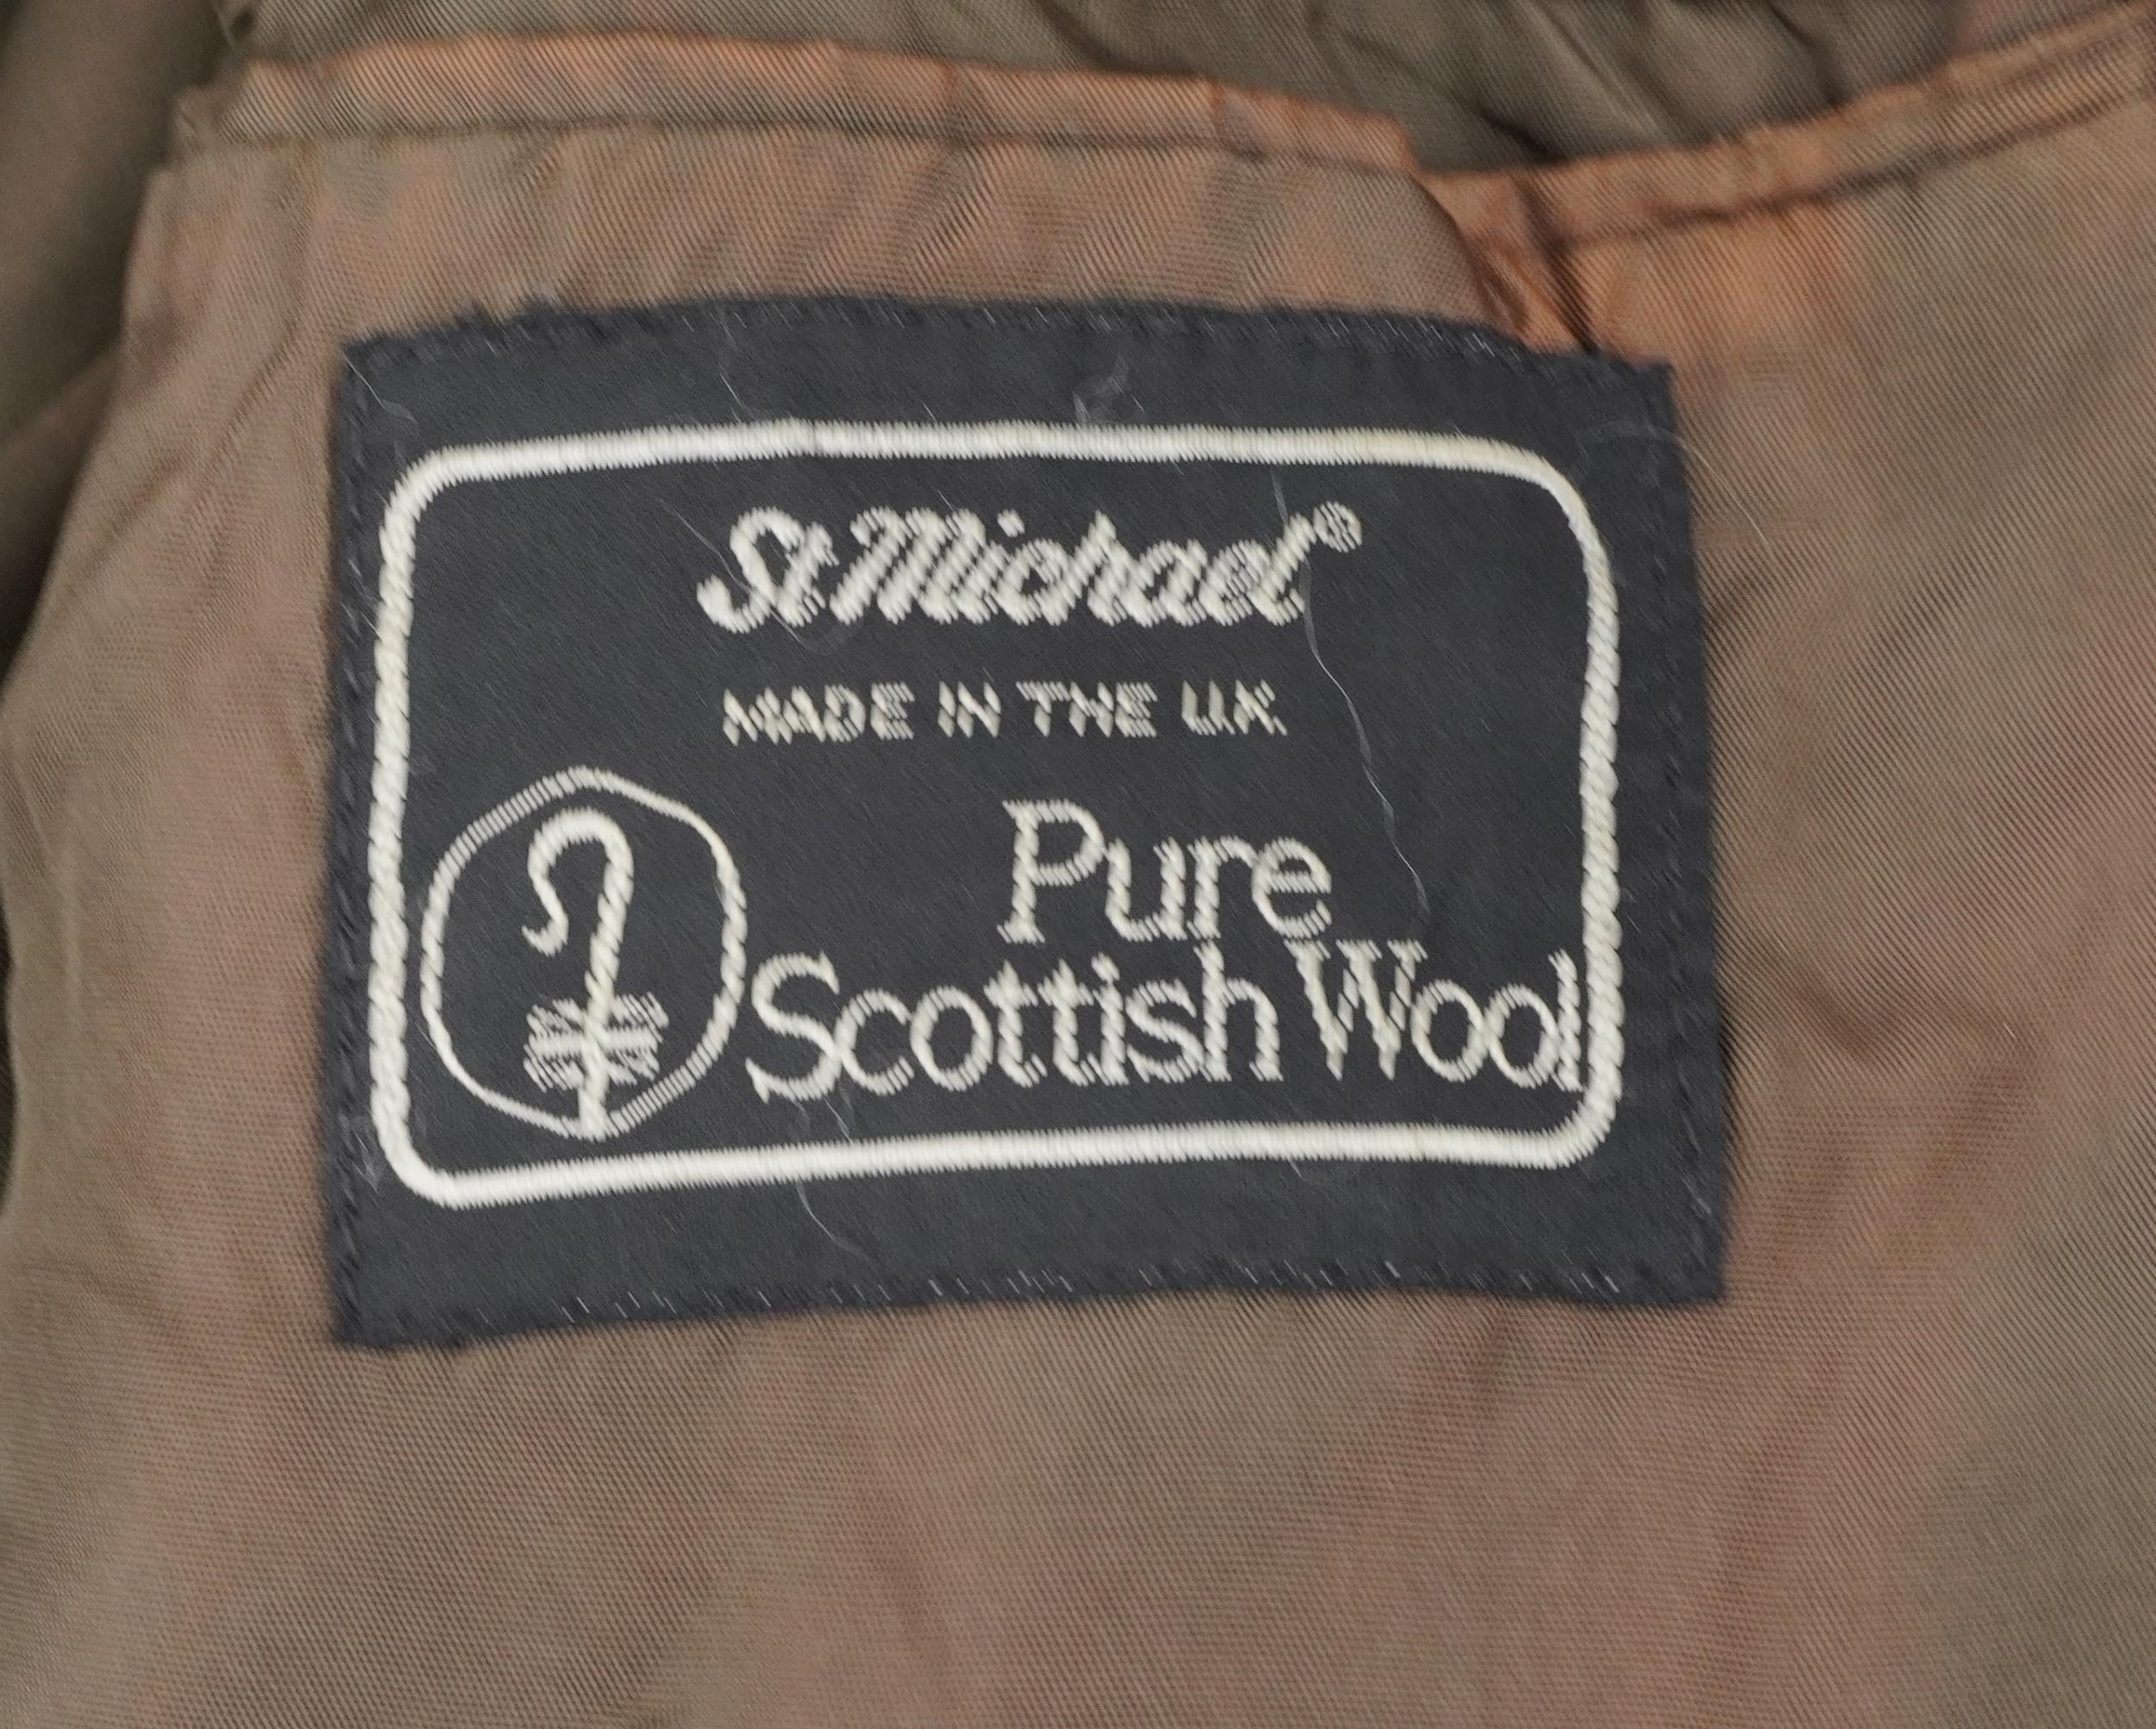 Two Harris tweed gentlemen's pure Scottish wool jackets, 80cm in length - Image 4 of 4